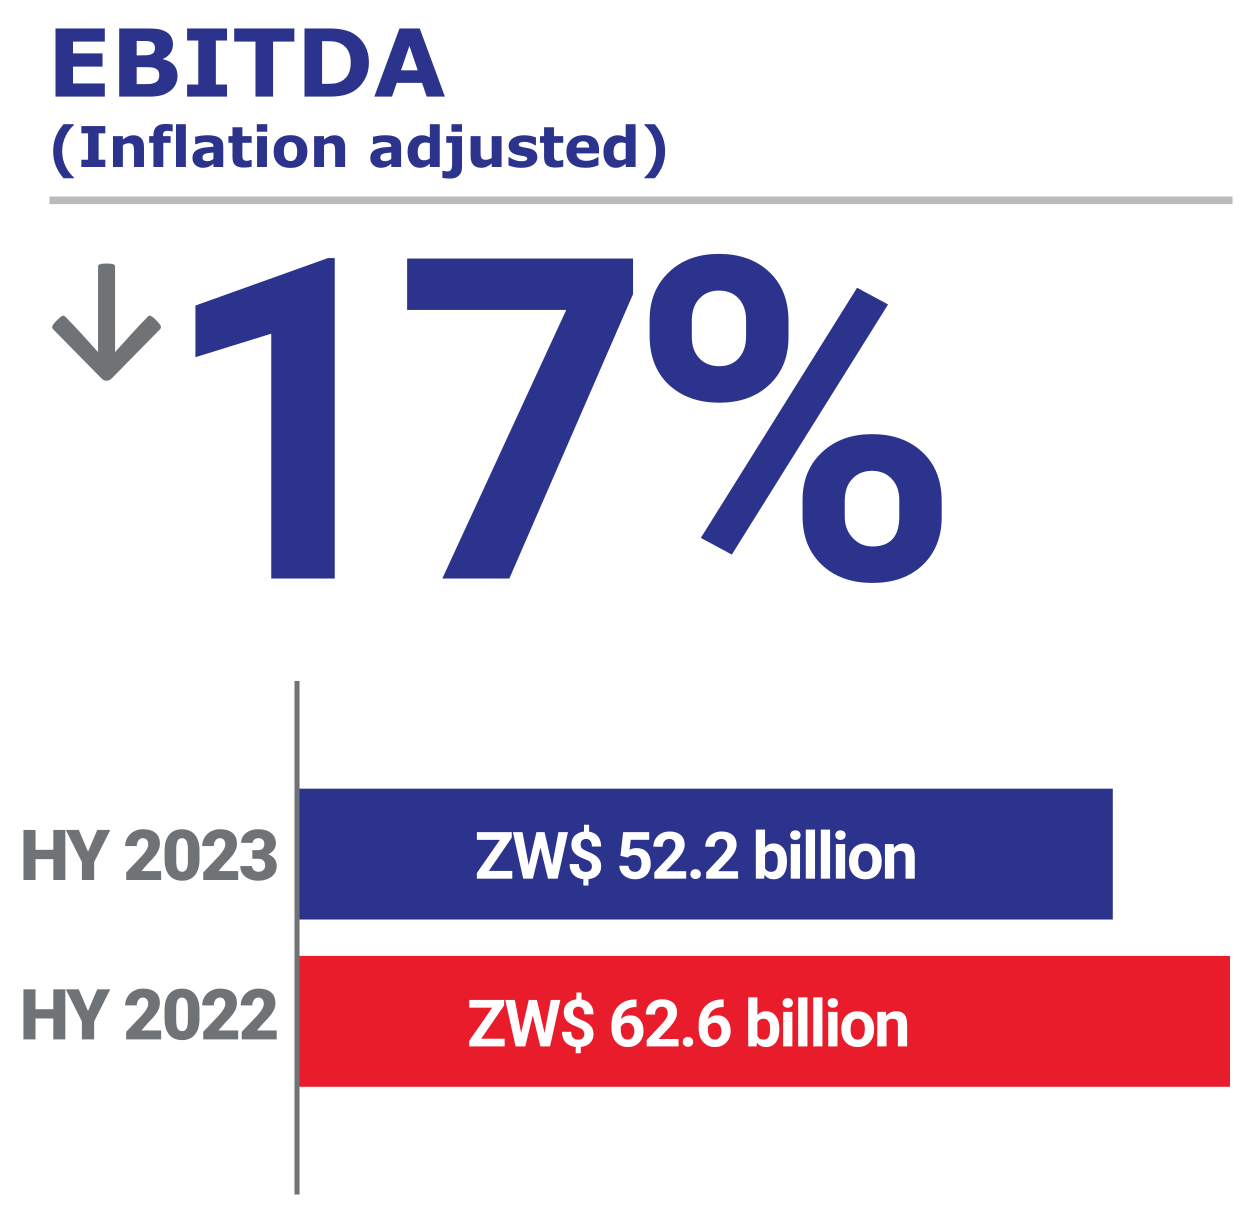 Econet HY2023: EBITDA (Inflation adjusted): -17%